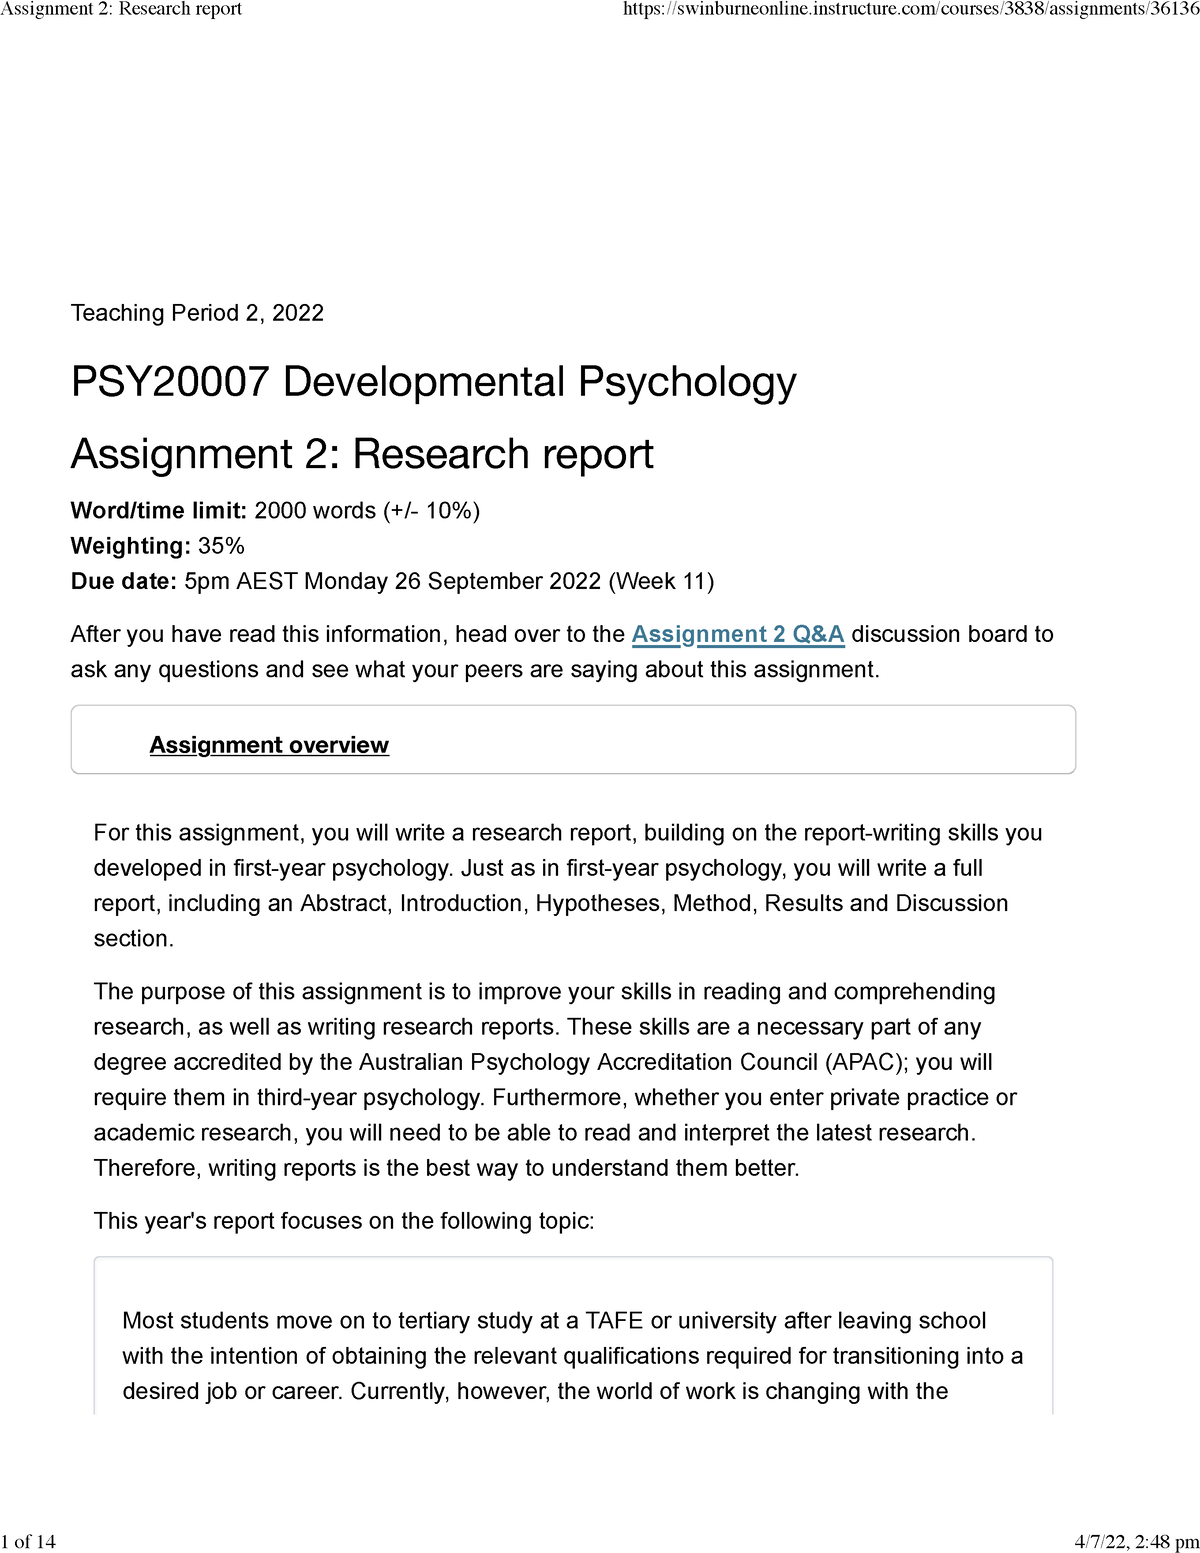 developmental psychology assignment pdf